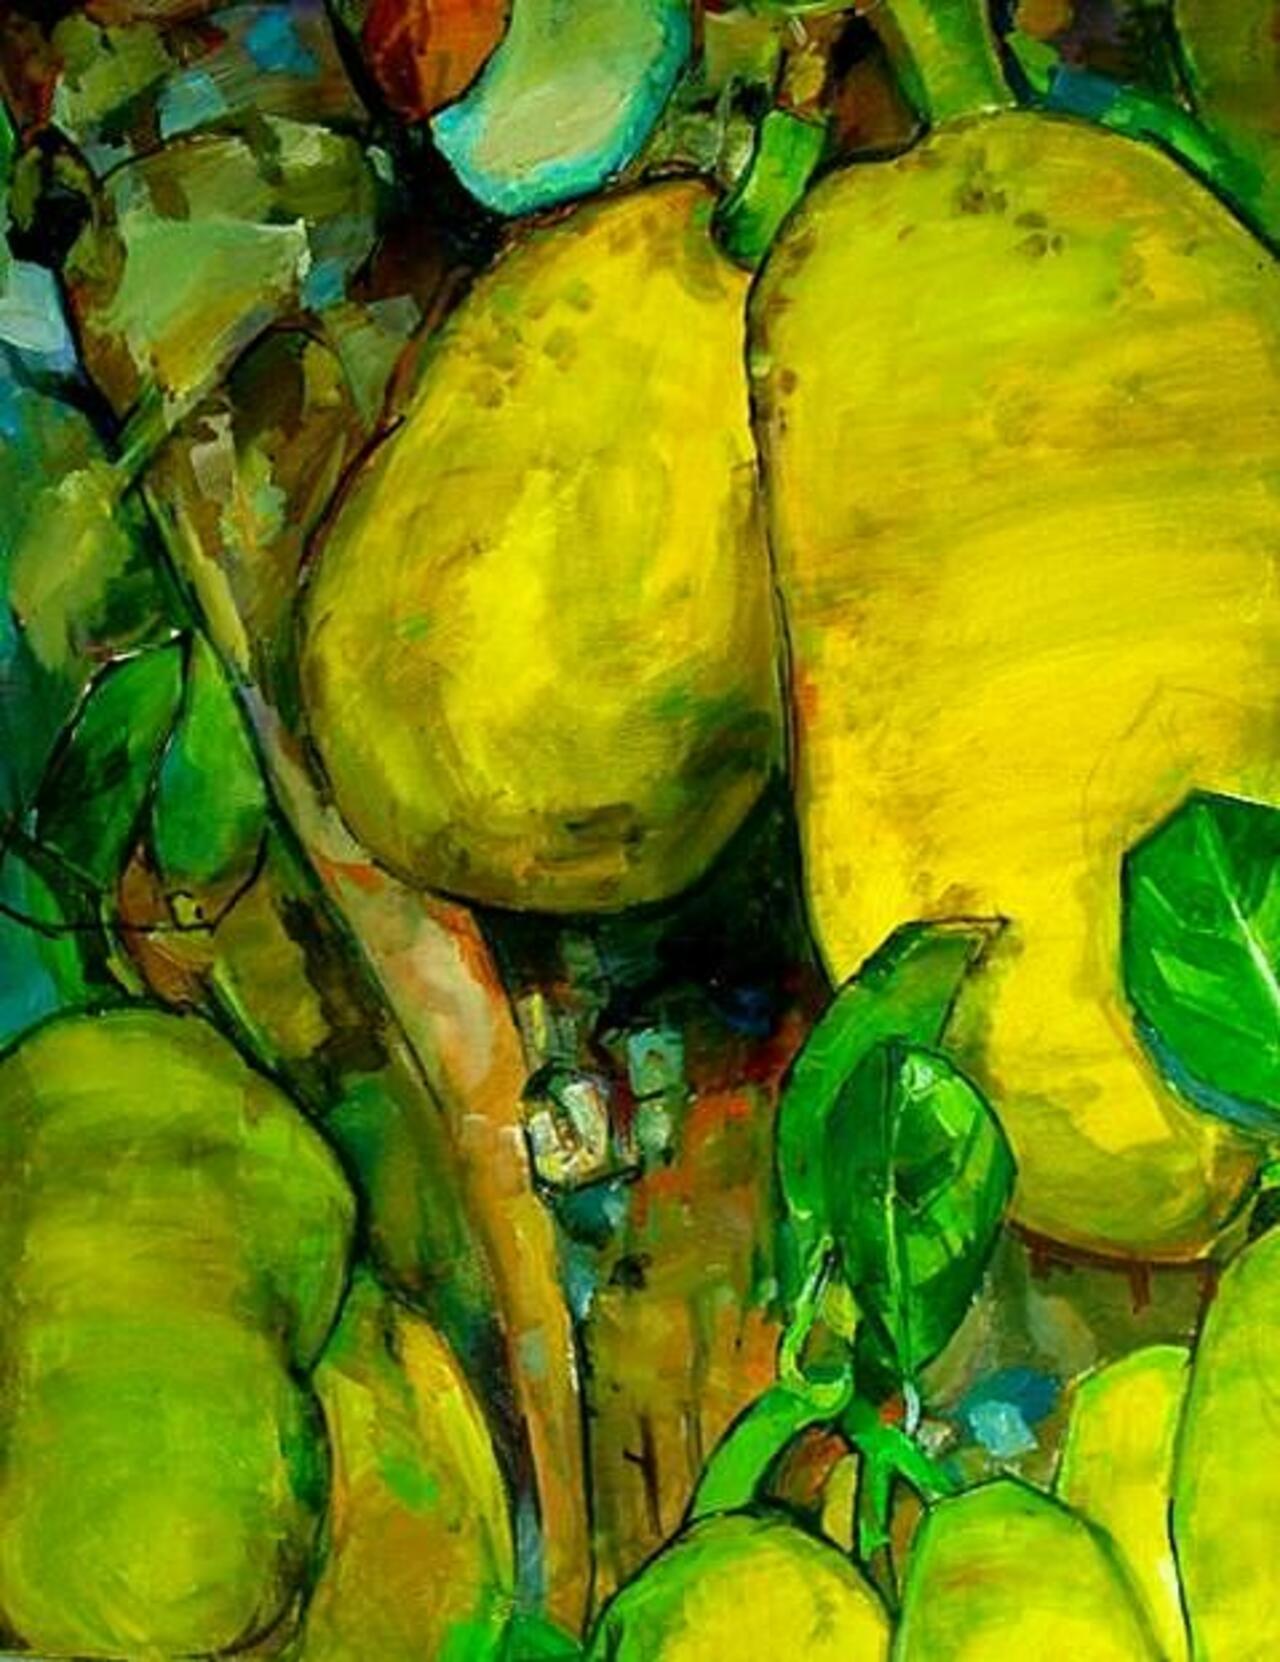 "Fruit for All Seasons (Jak)" by Ranjith Perera #lka #srilanka #art #allart #artbot #oilpaintings #paintings #island http://t.co/CLX9wTxqNm